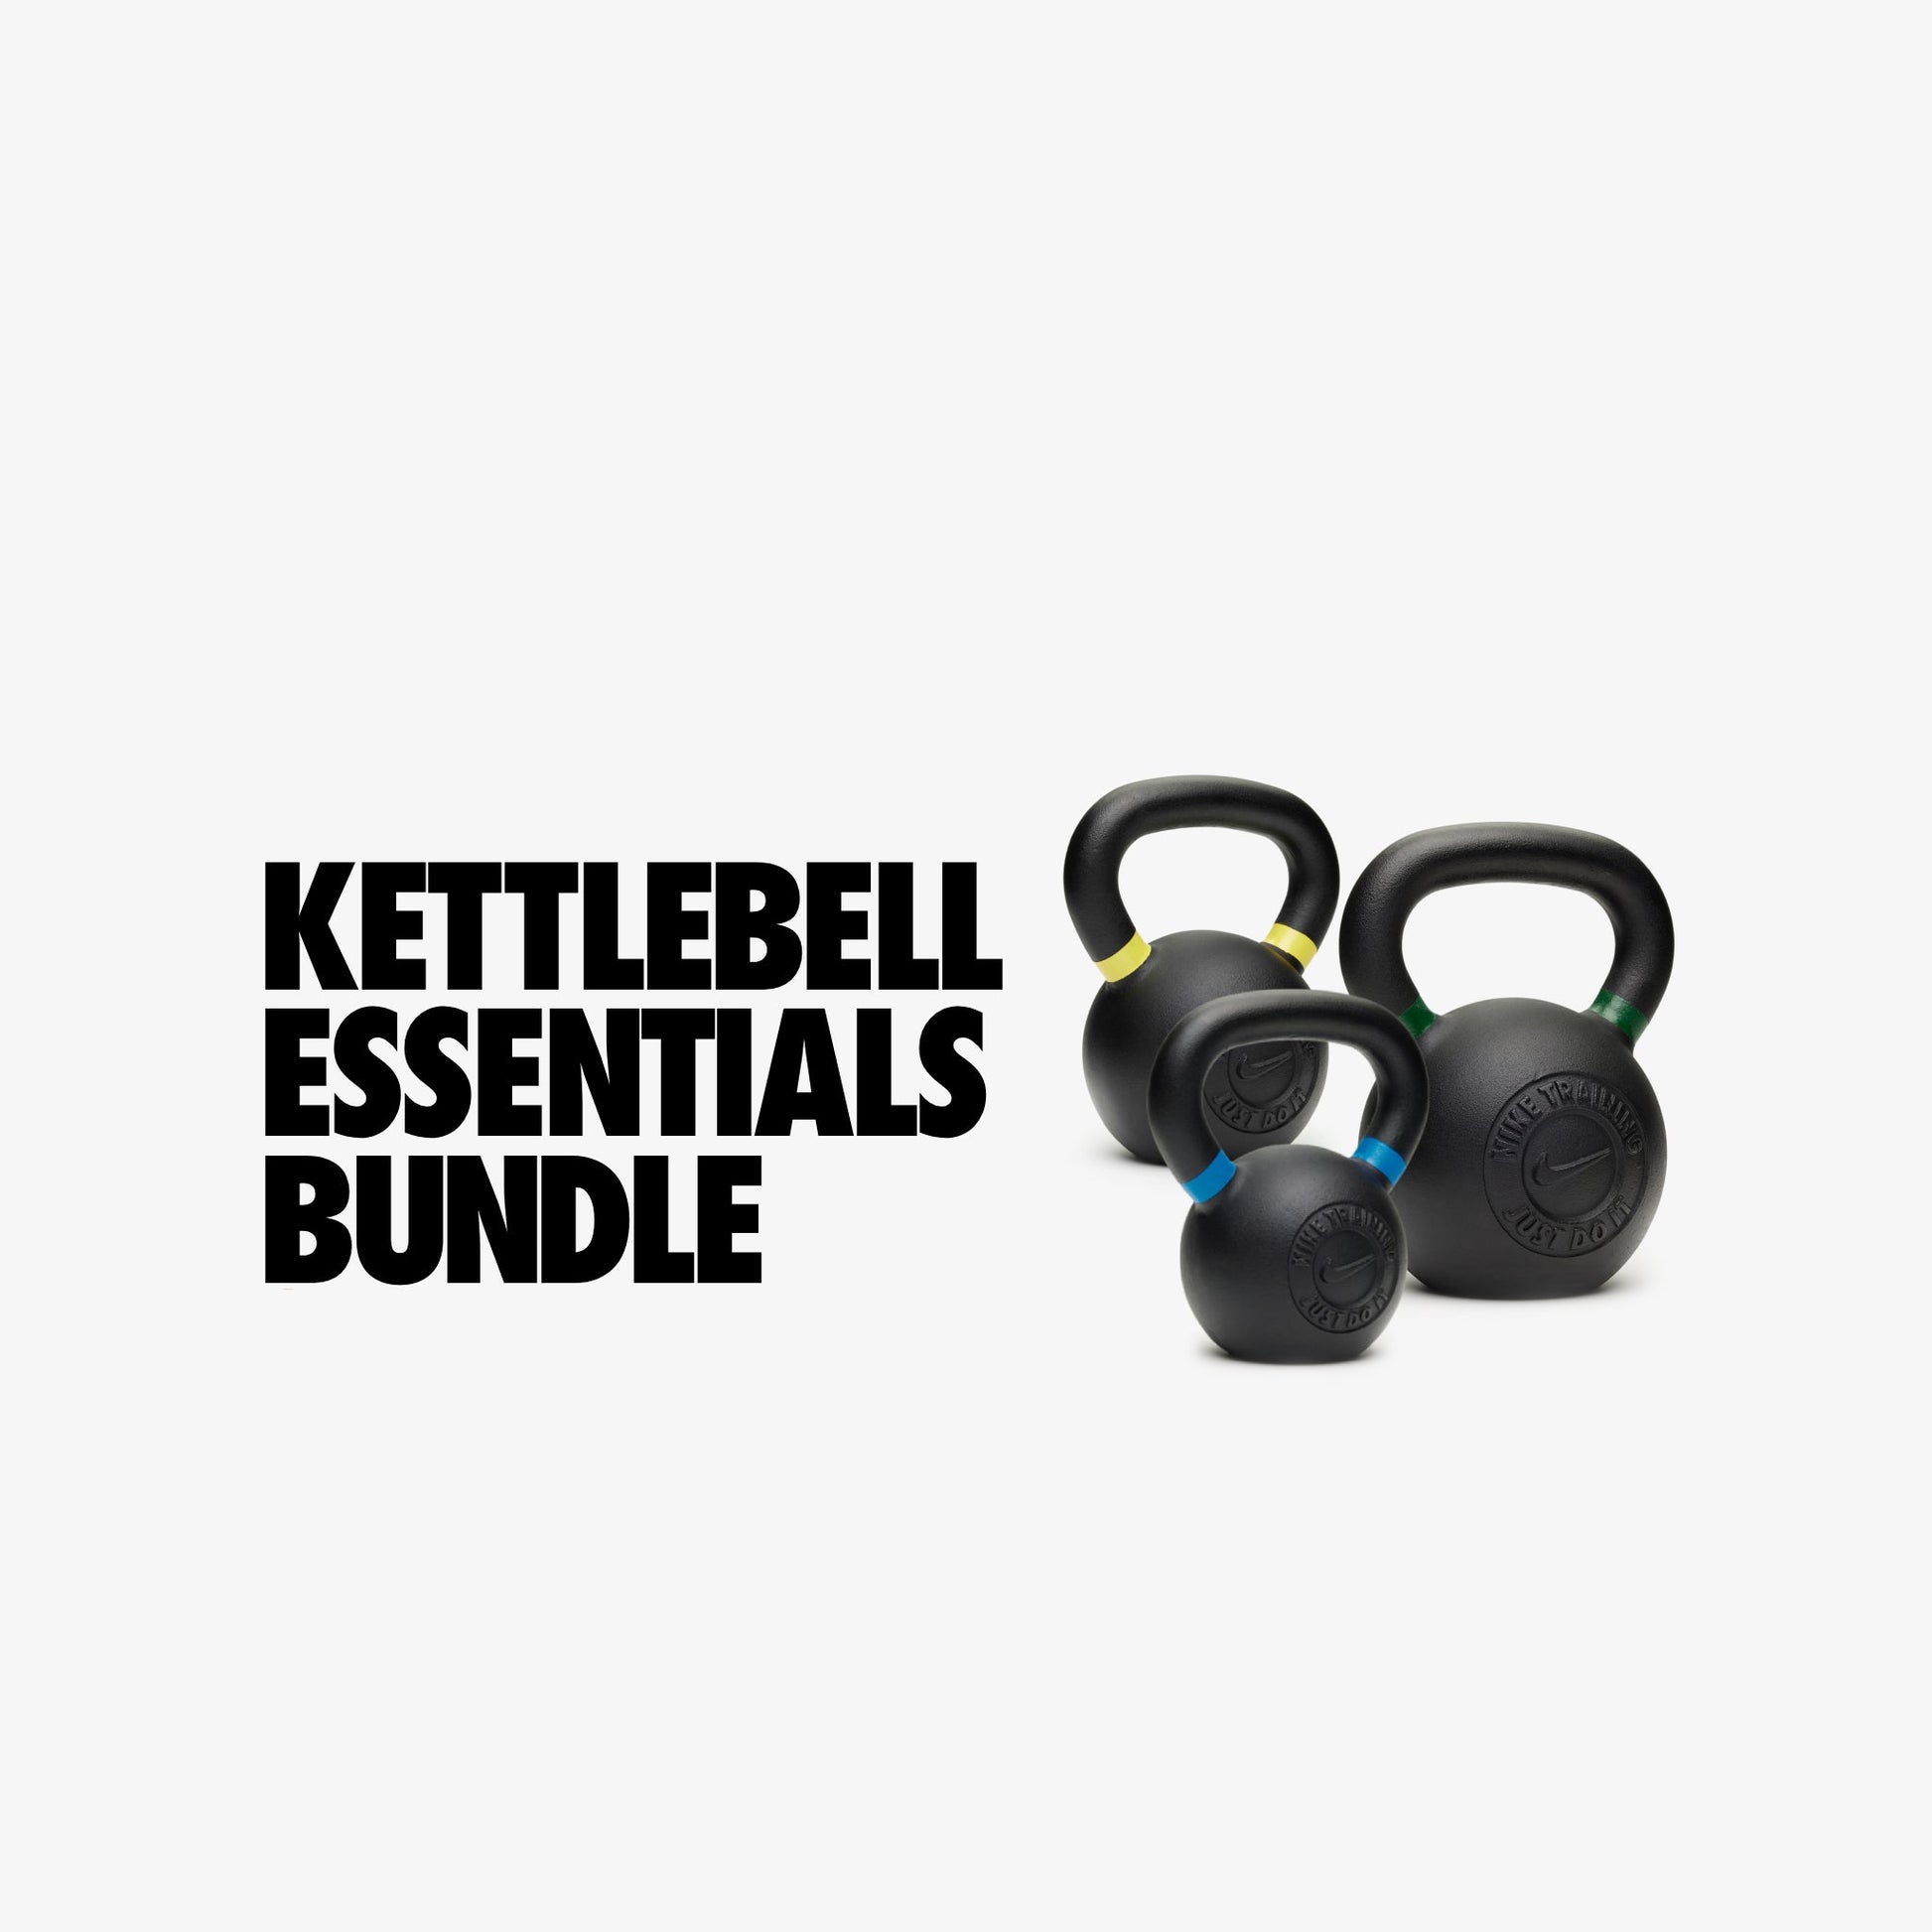 Nike Strength Kettlebell Essentials Bundle